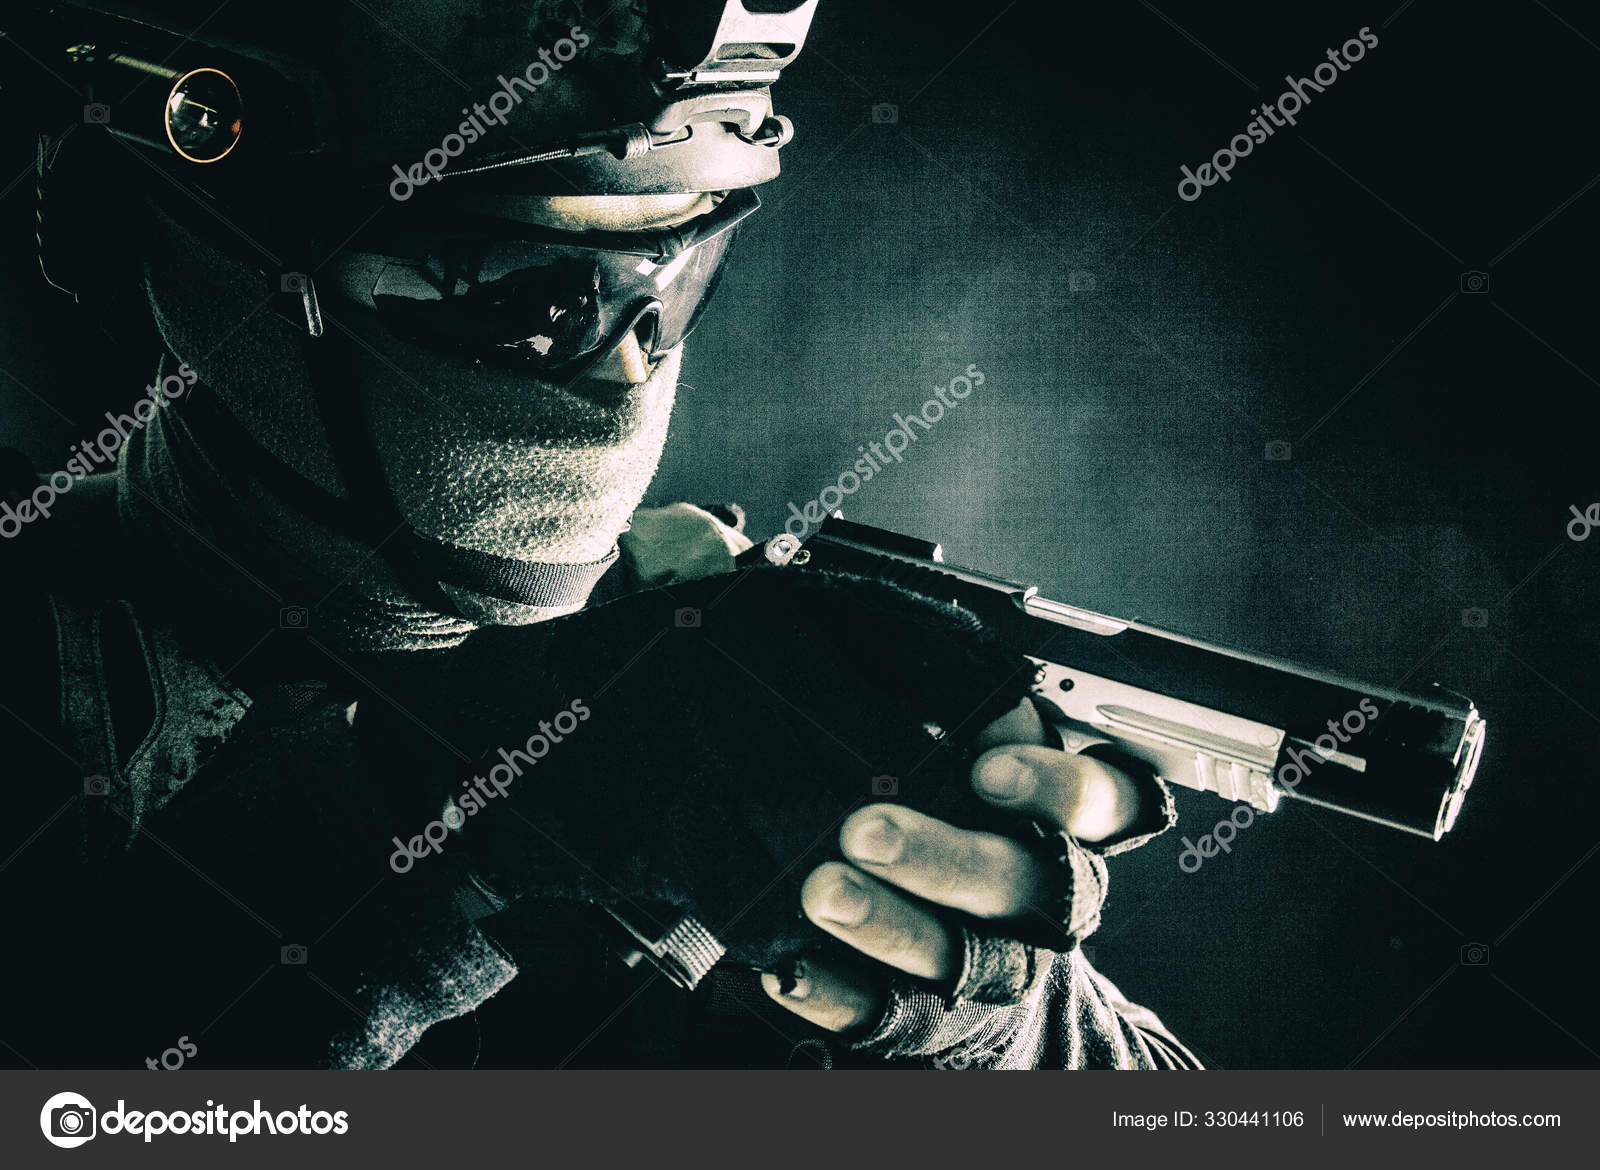 https://st3.depositphotos.com/1008163/33044/i/1600/depositphotos_330441106-stock-photo-police-swat-team-fighter-aiming.jpg